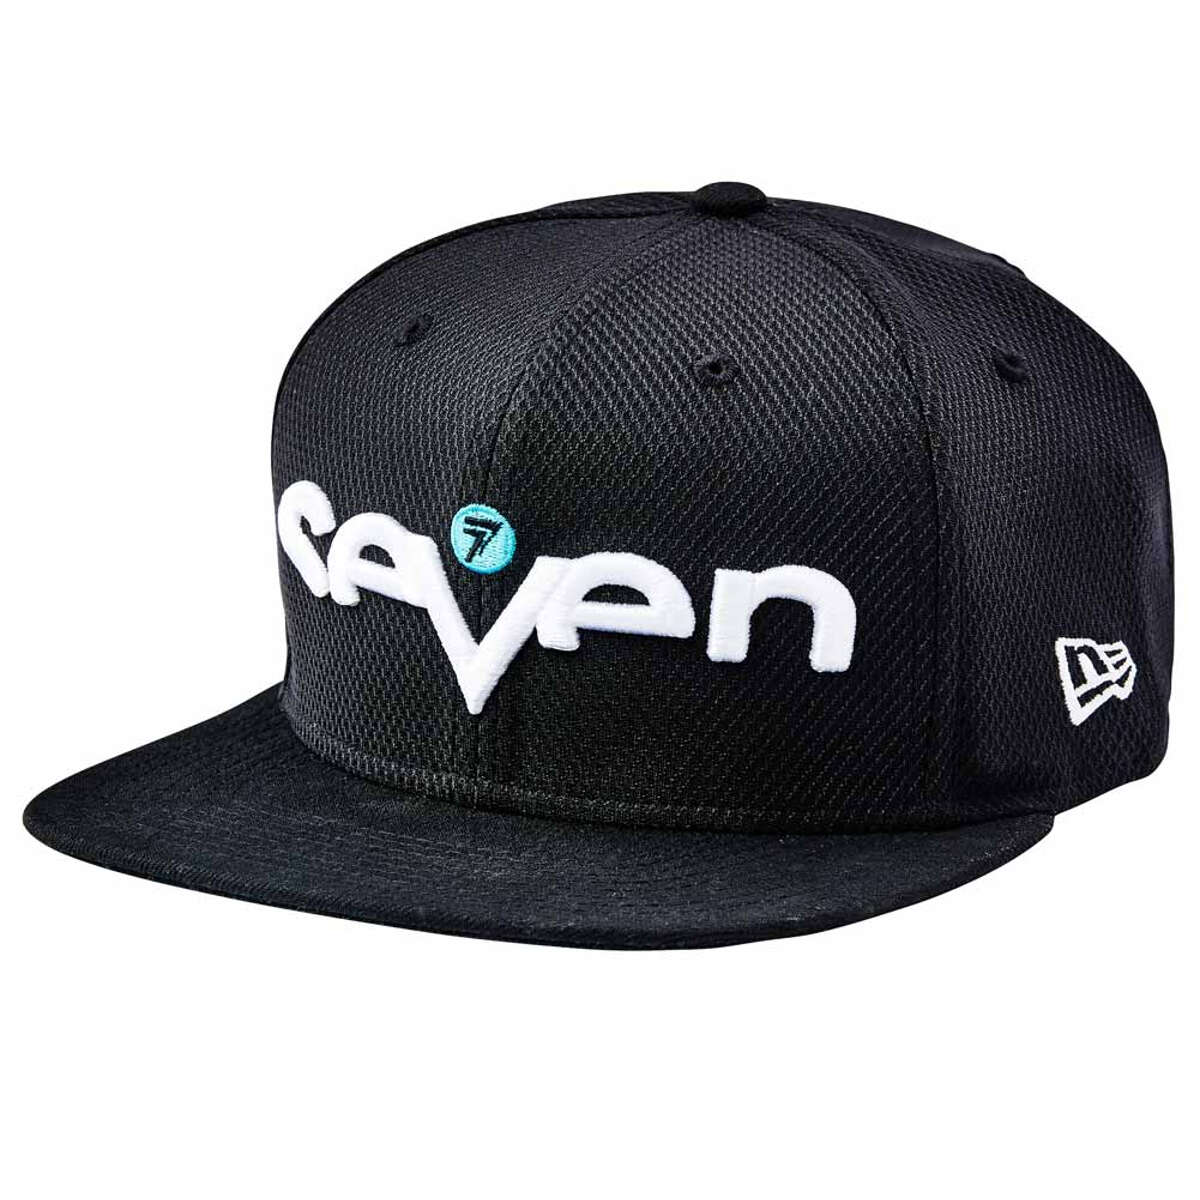 Seven MX Kids Snapback Cap Youth Brand Black/Aqua